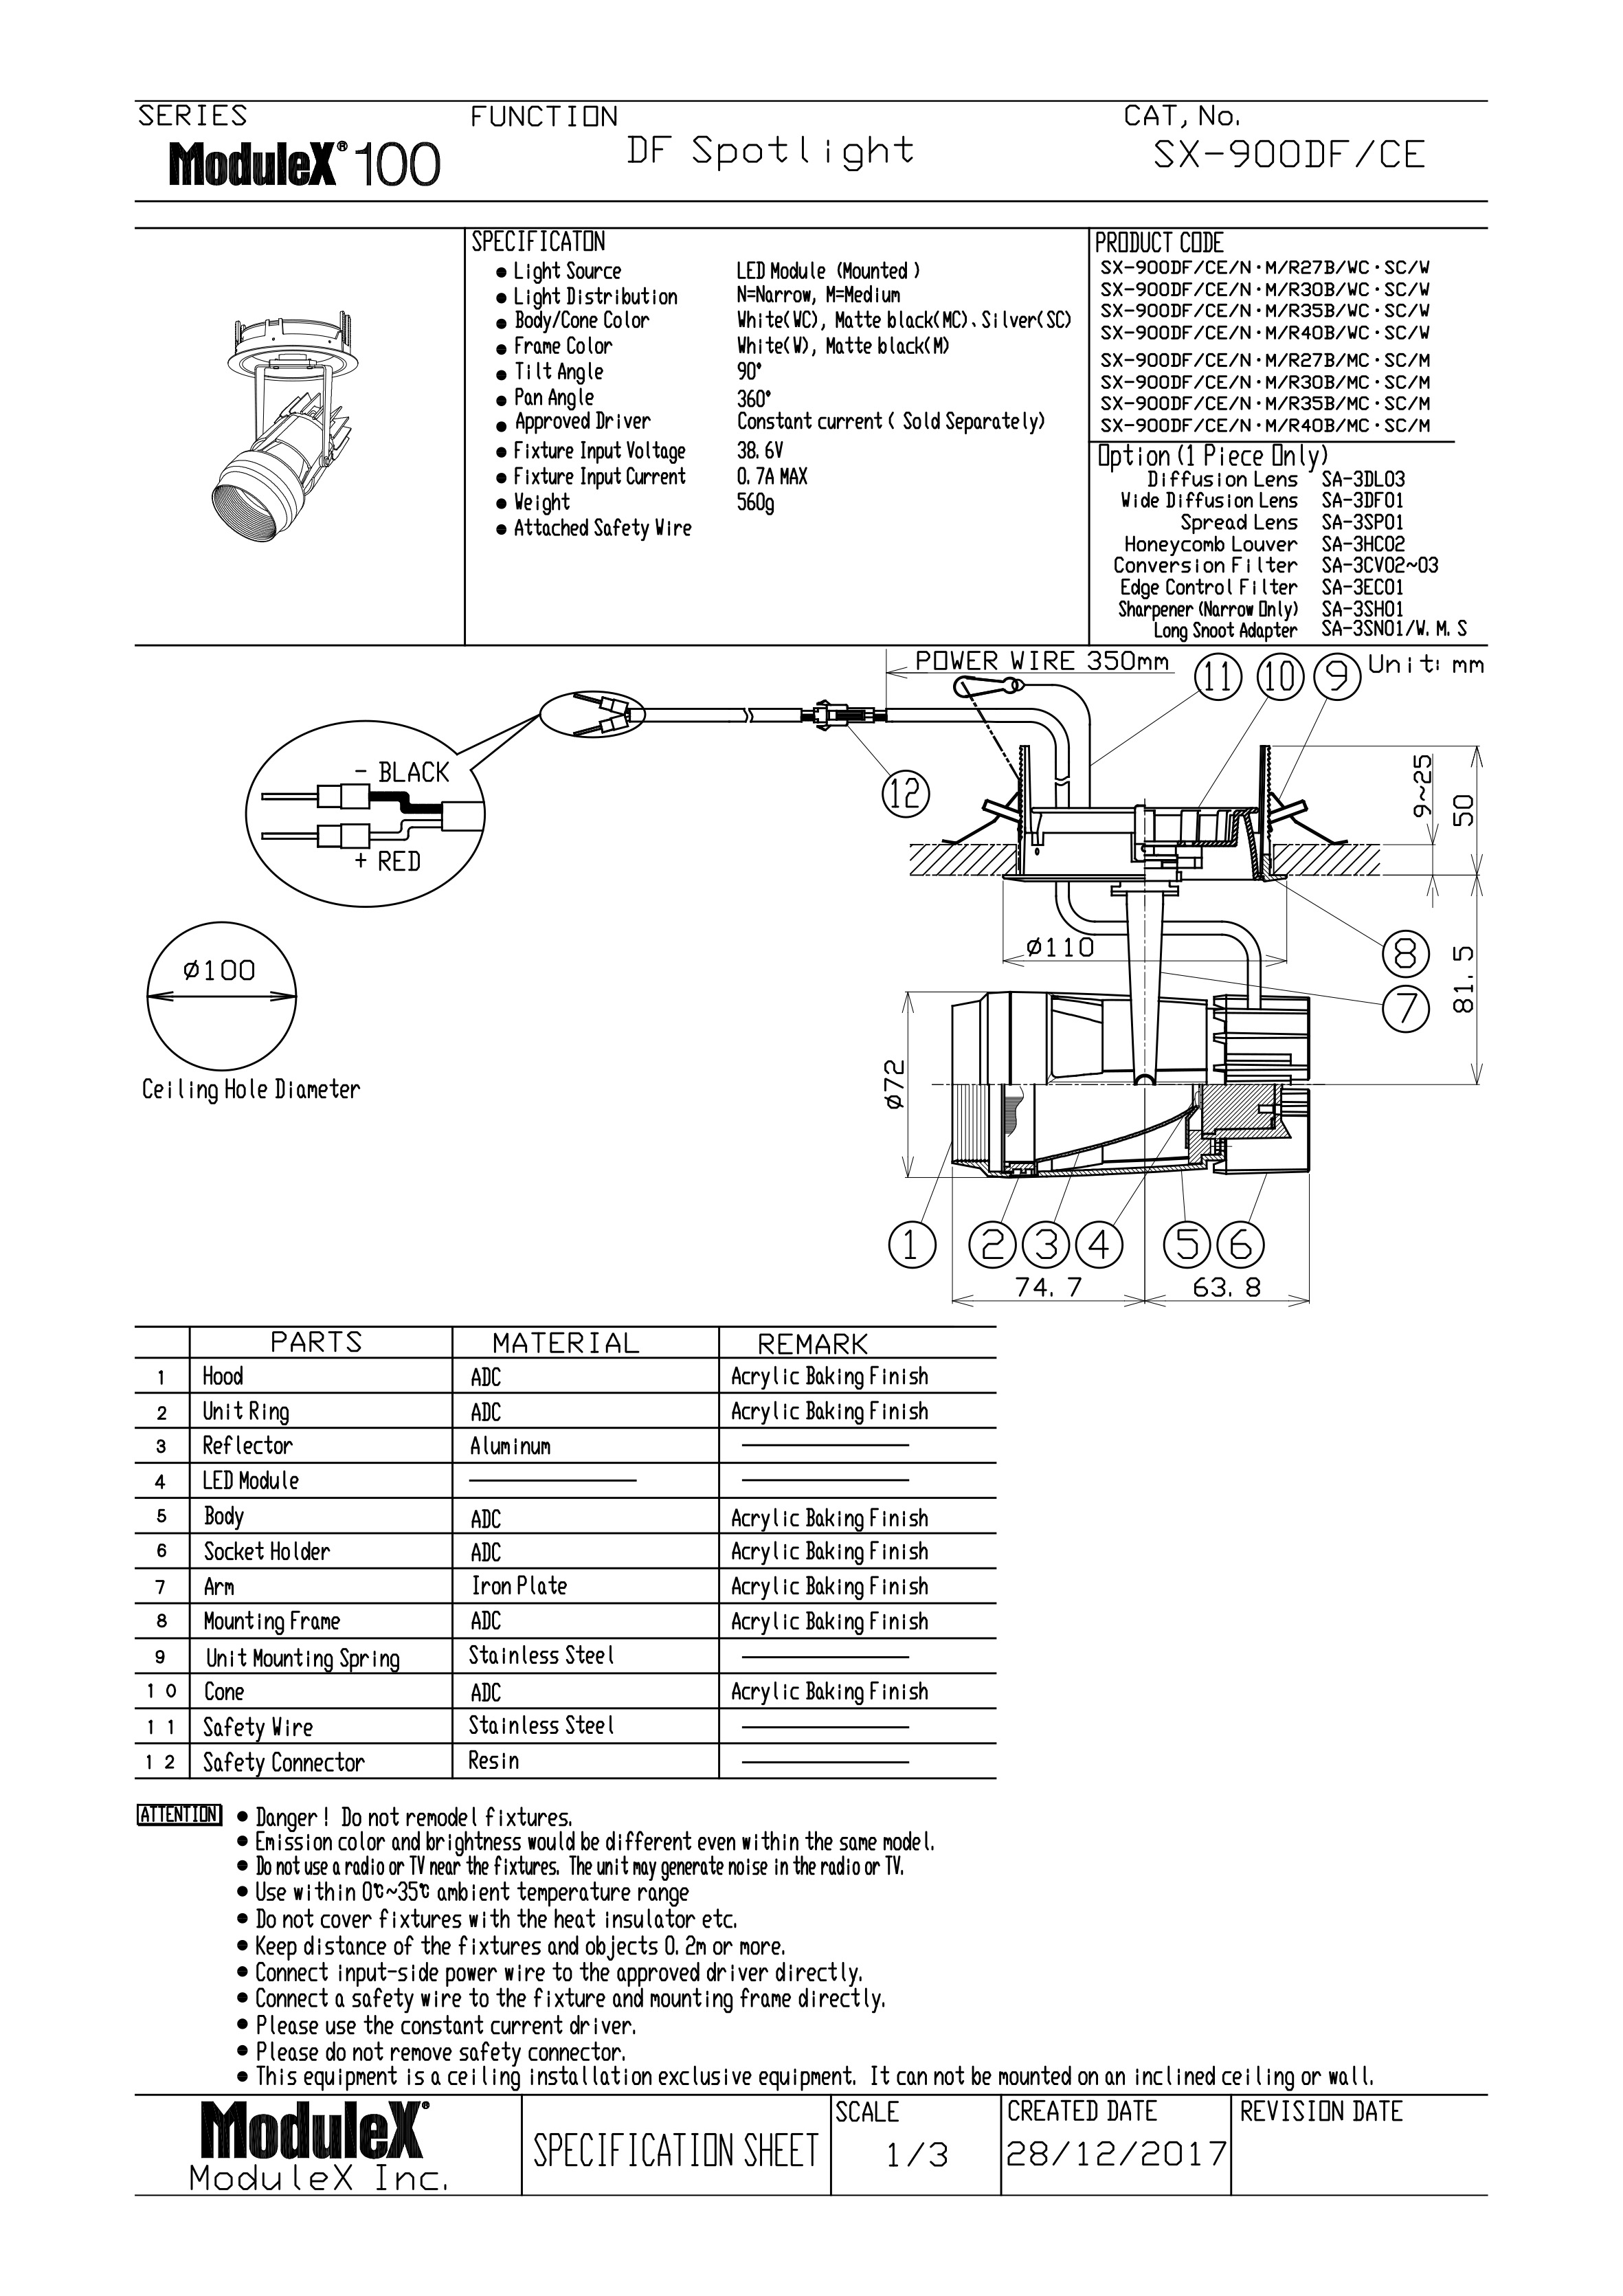 SX-900DF Specification Sheet